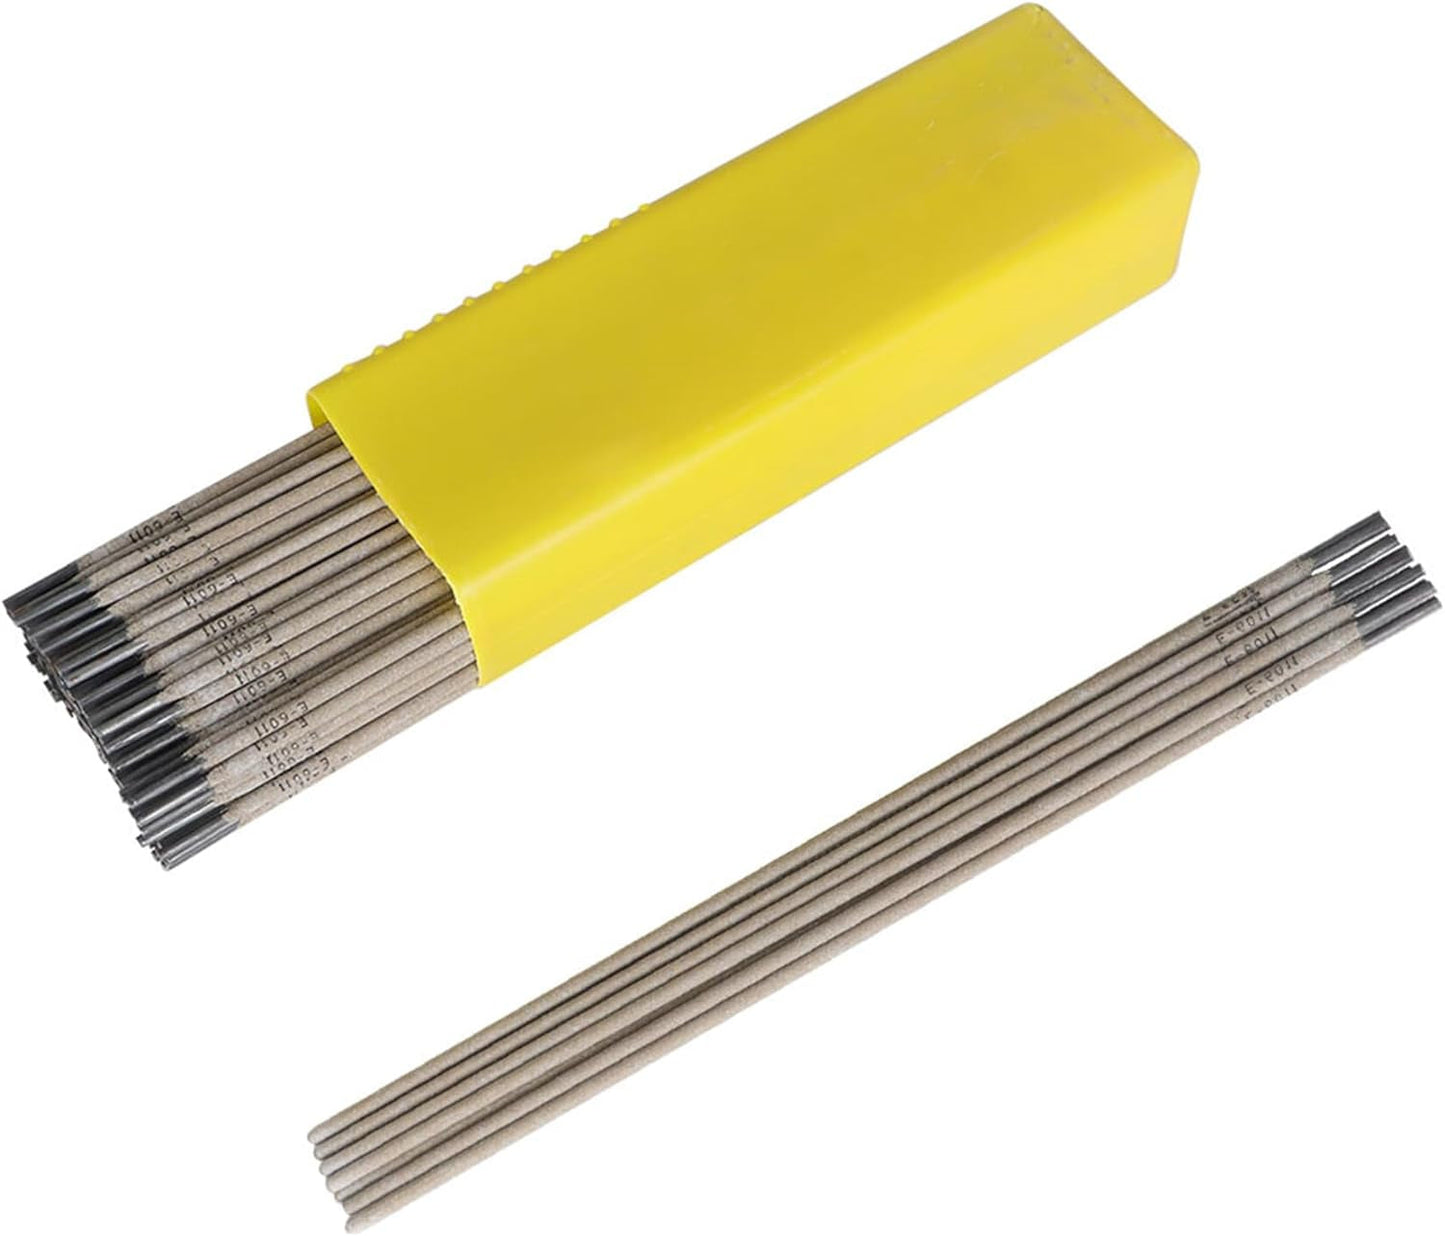 6 Packs of 10 Lbs E6011 1/8 Inch Carbon Steel Electrode Arc Welding Rods Welding Electrode